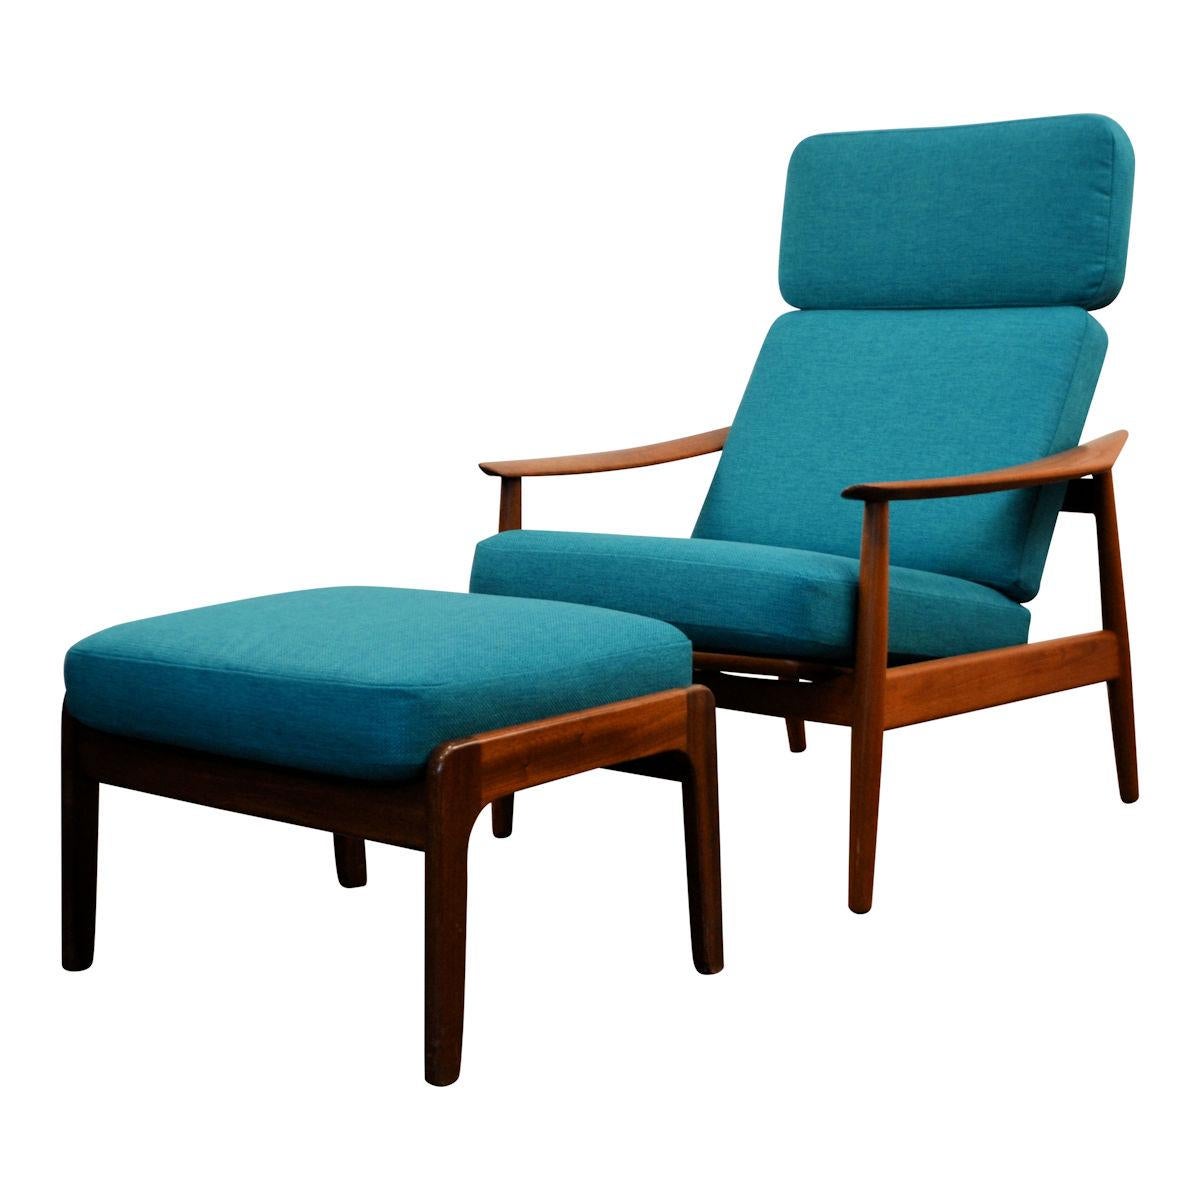 Vintage Arne Vodder Fd-164 Teak Lounge Chair and Ottoman For Sale 7